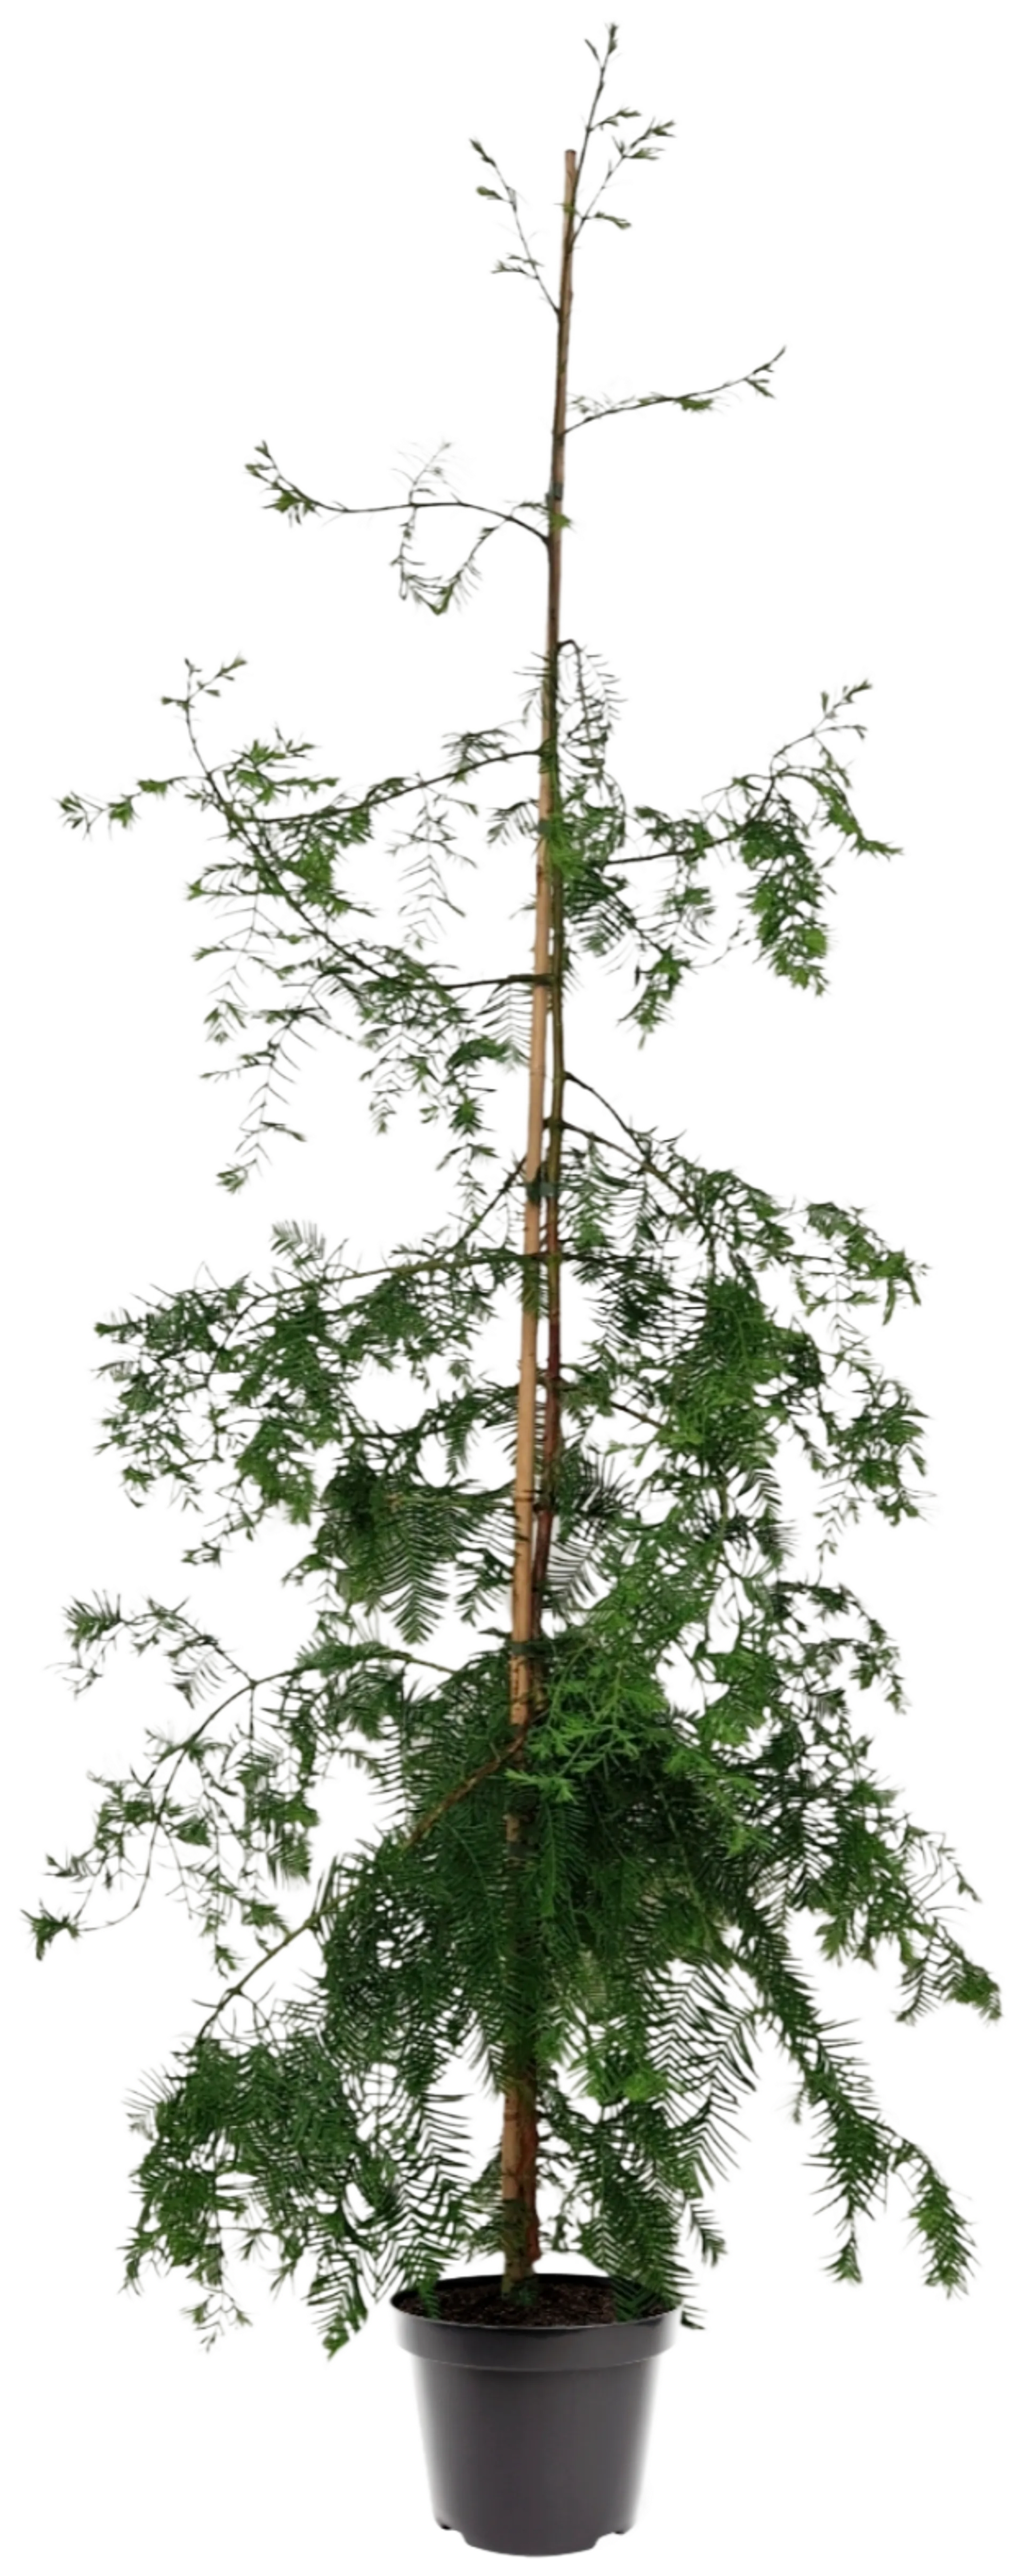 Kiinanpunapuu 125-150 cm astiataimi 7,5 l ruukku Metasequoia glyptostroboides